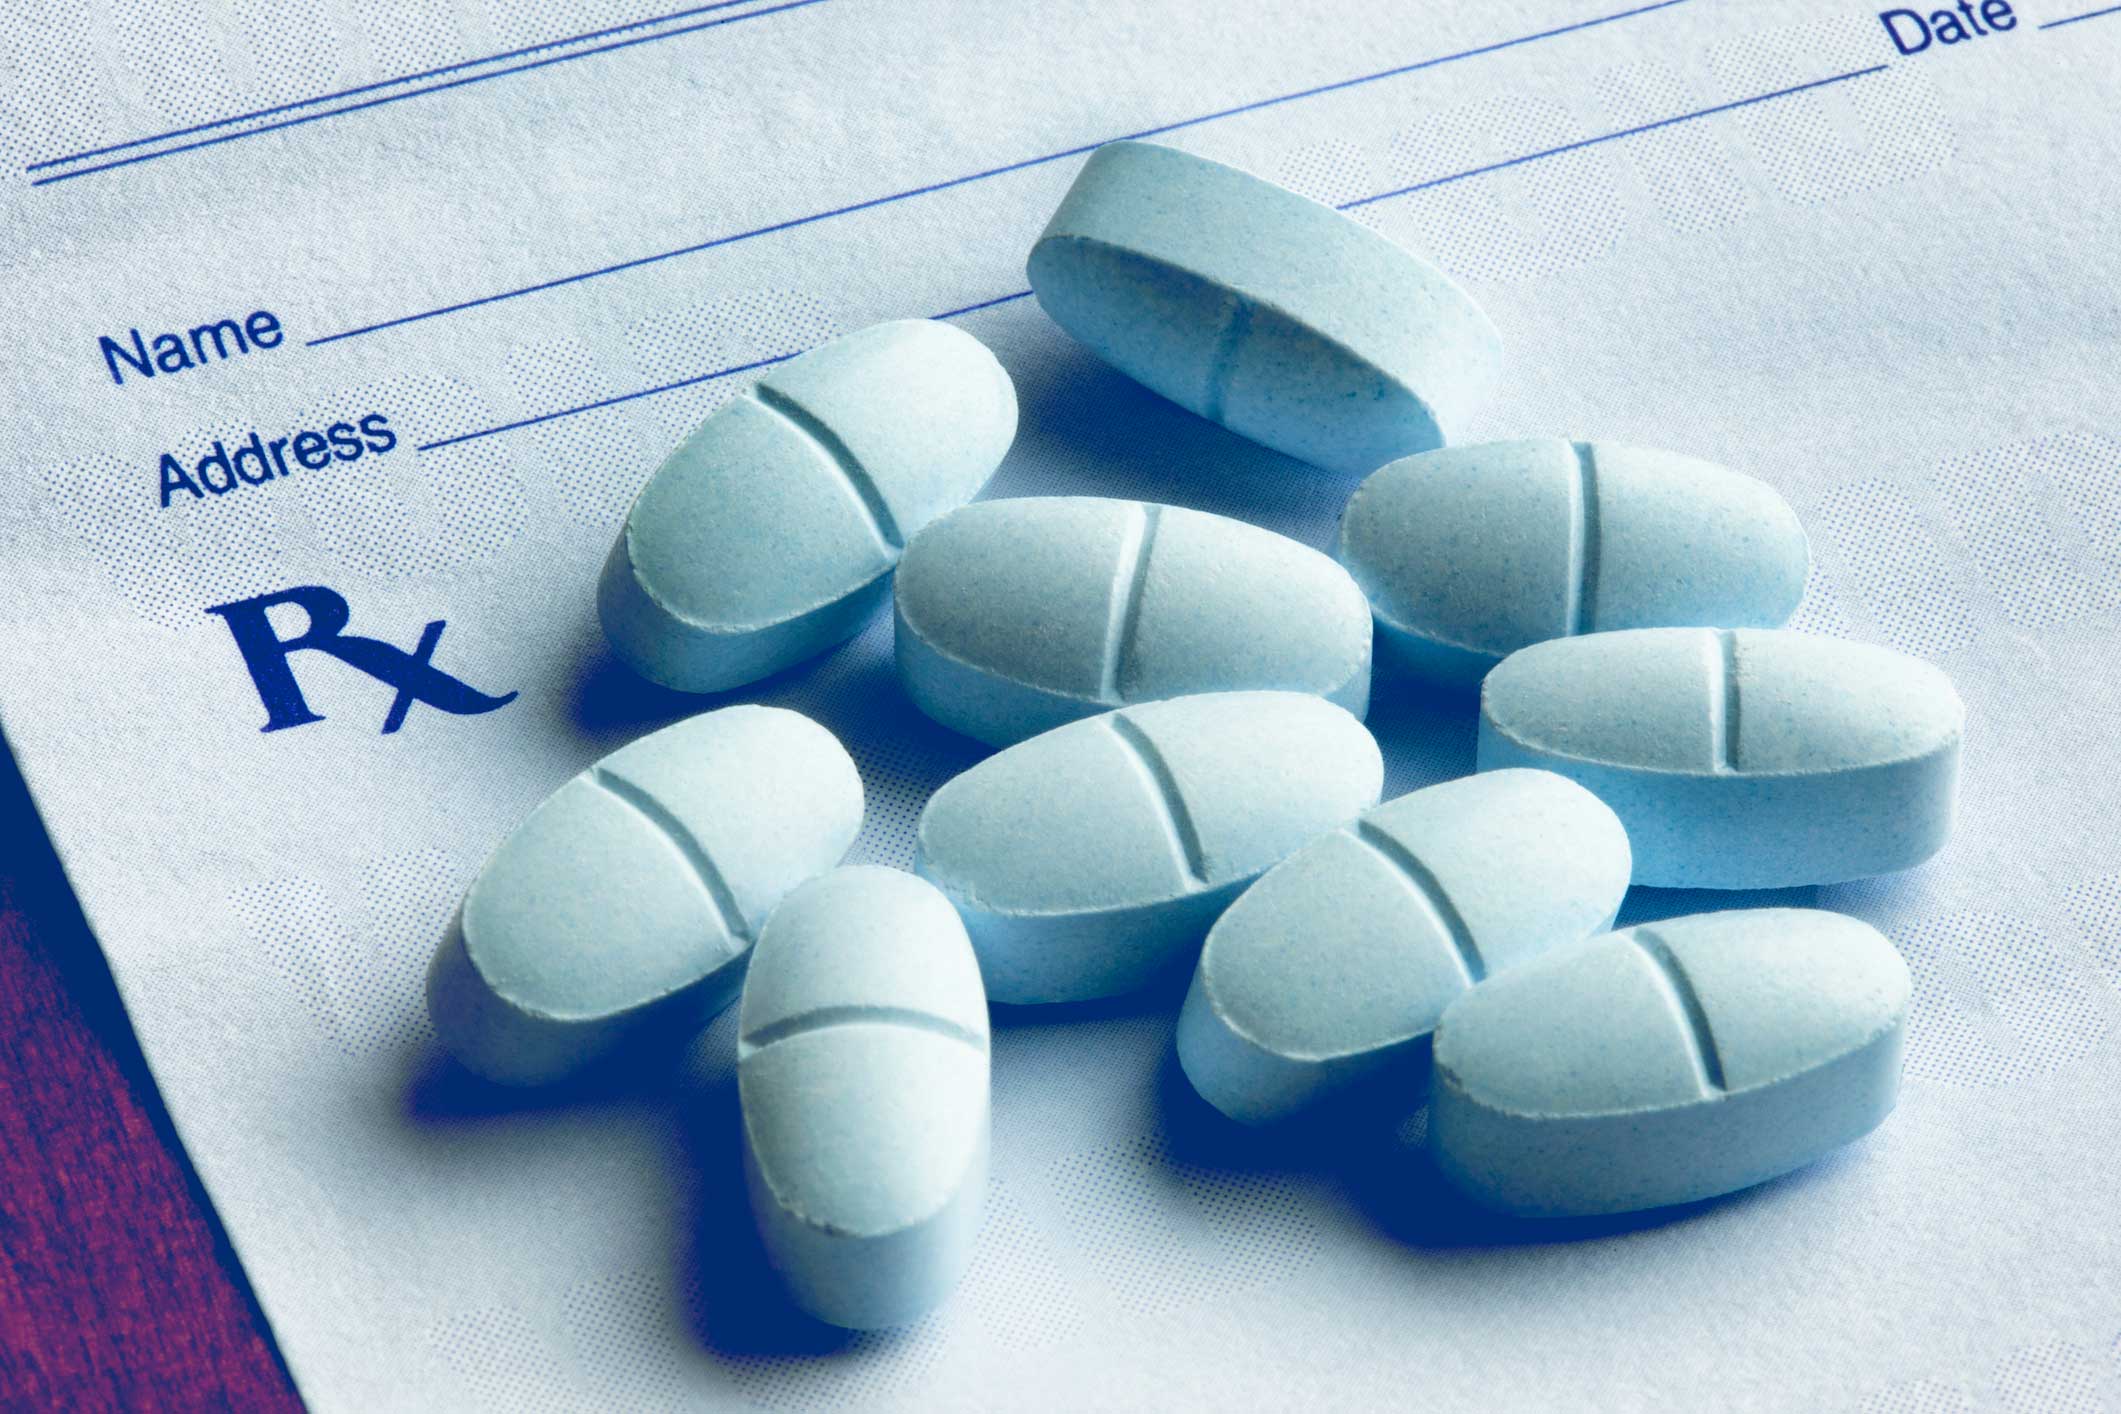 Pills sitting on top of a prescription pad